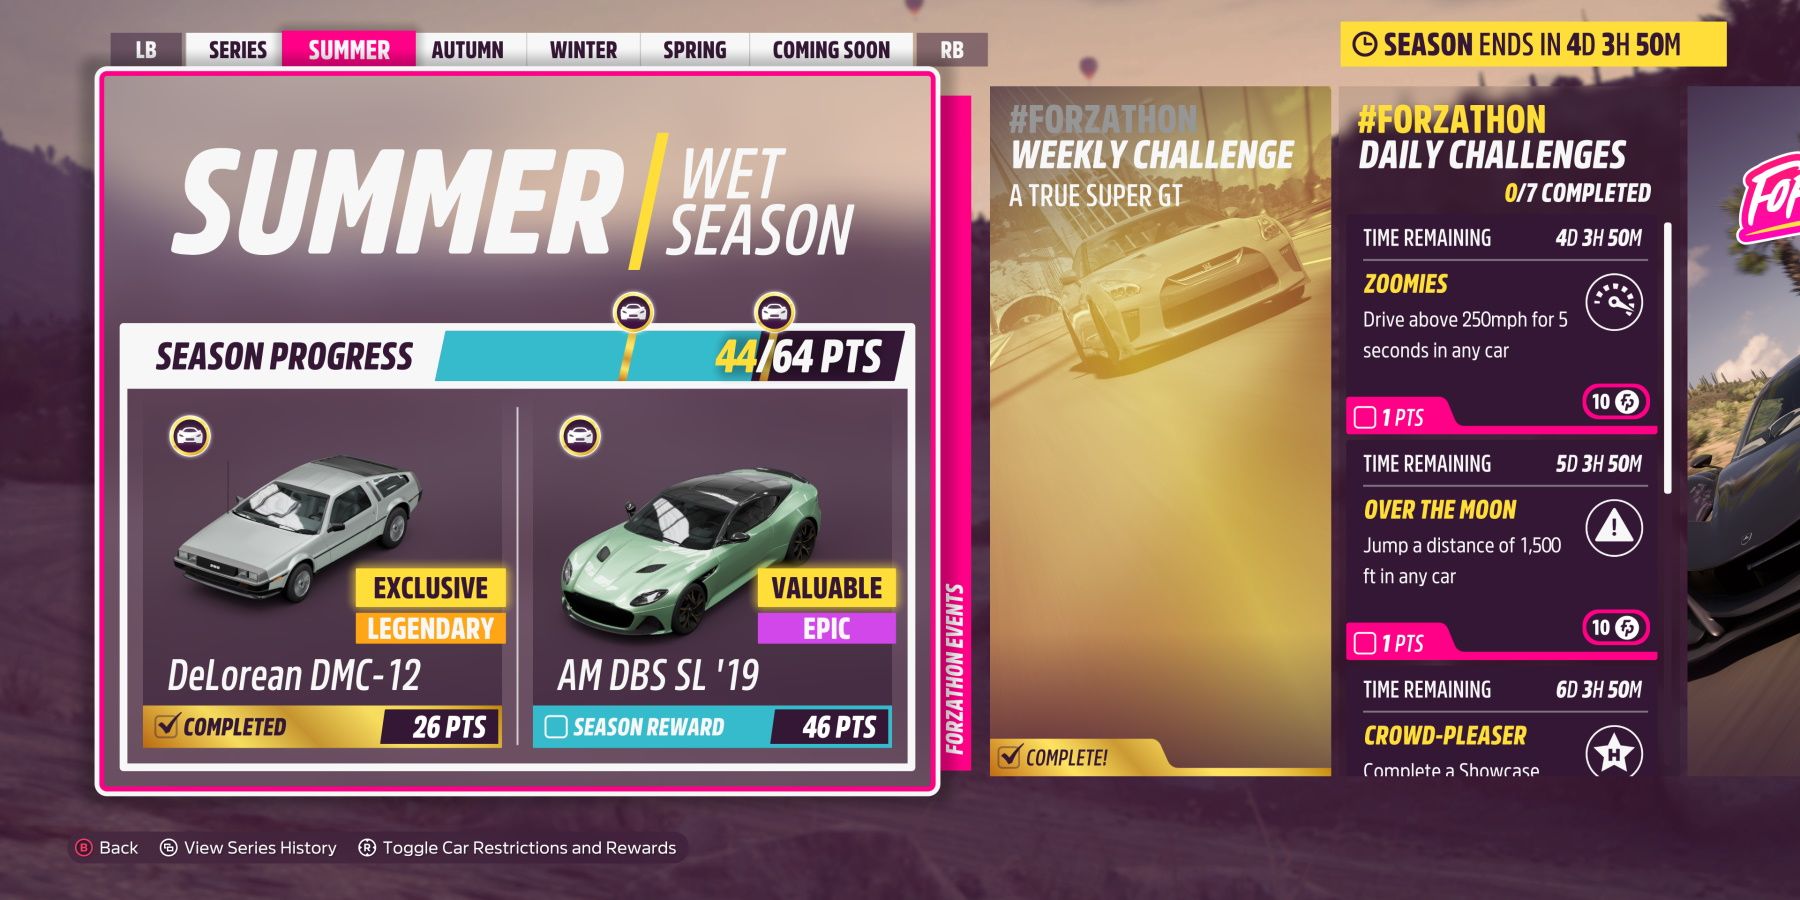 Forza Horizon 5 Series 1 Summer Wet Season Car Rewards